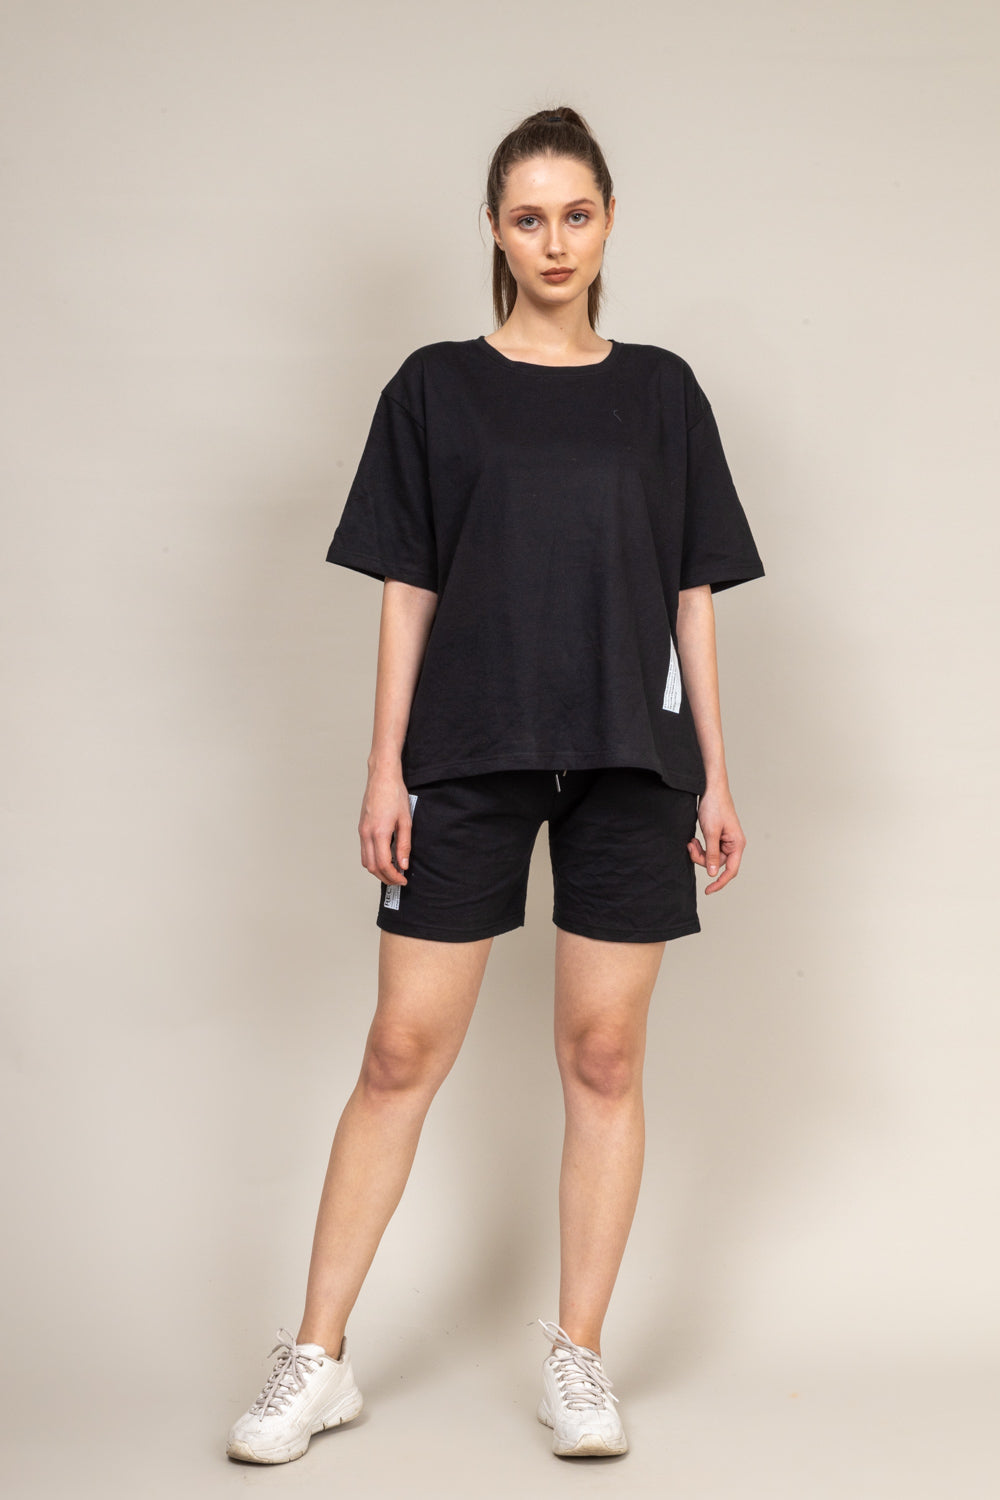 Midnight Black Oversized T-shirt Shorts Co-Ord